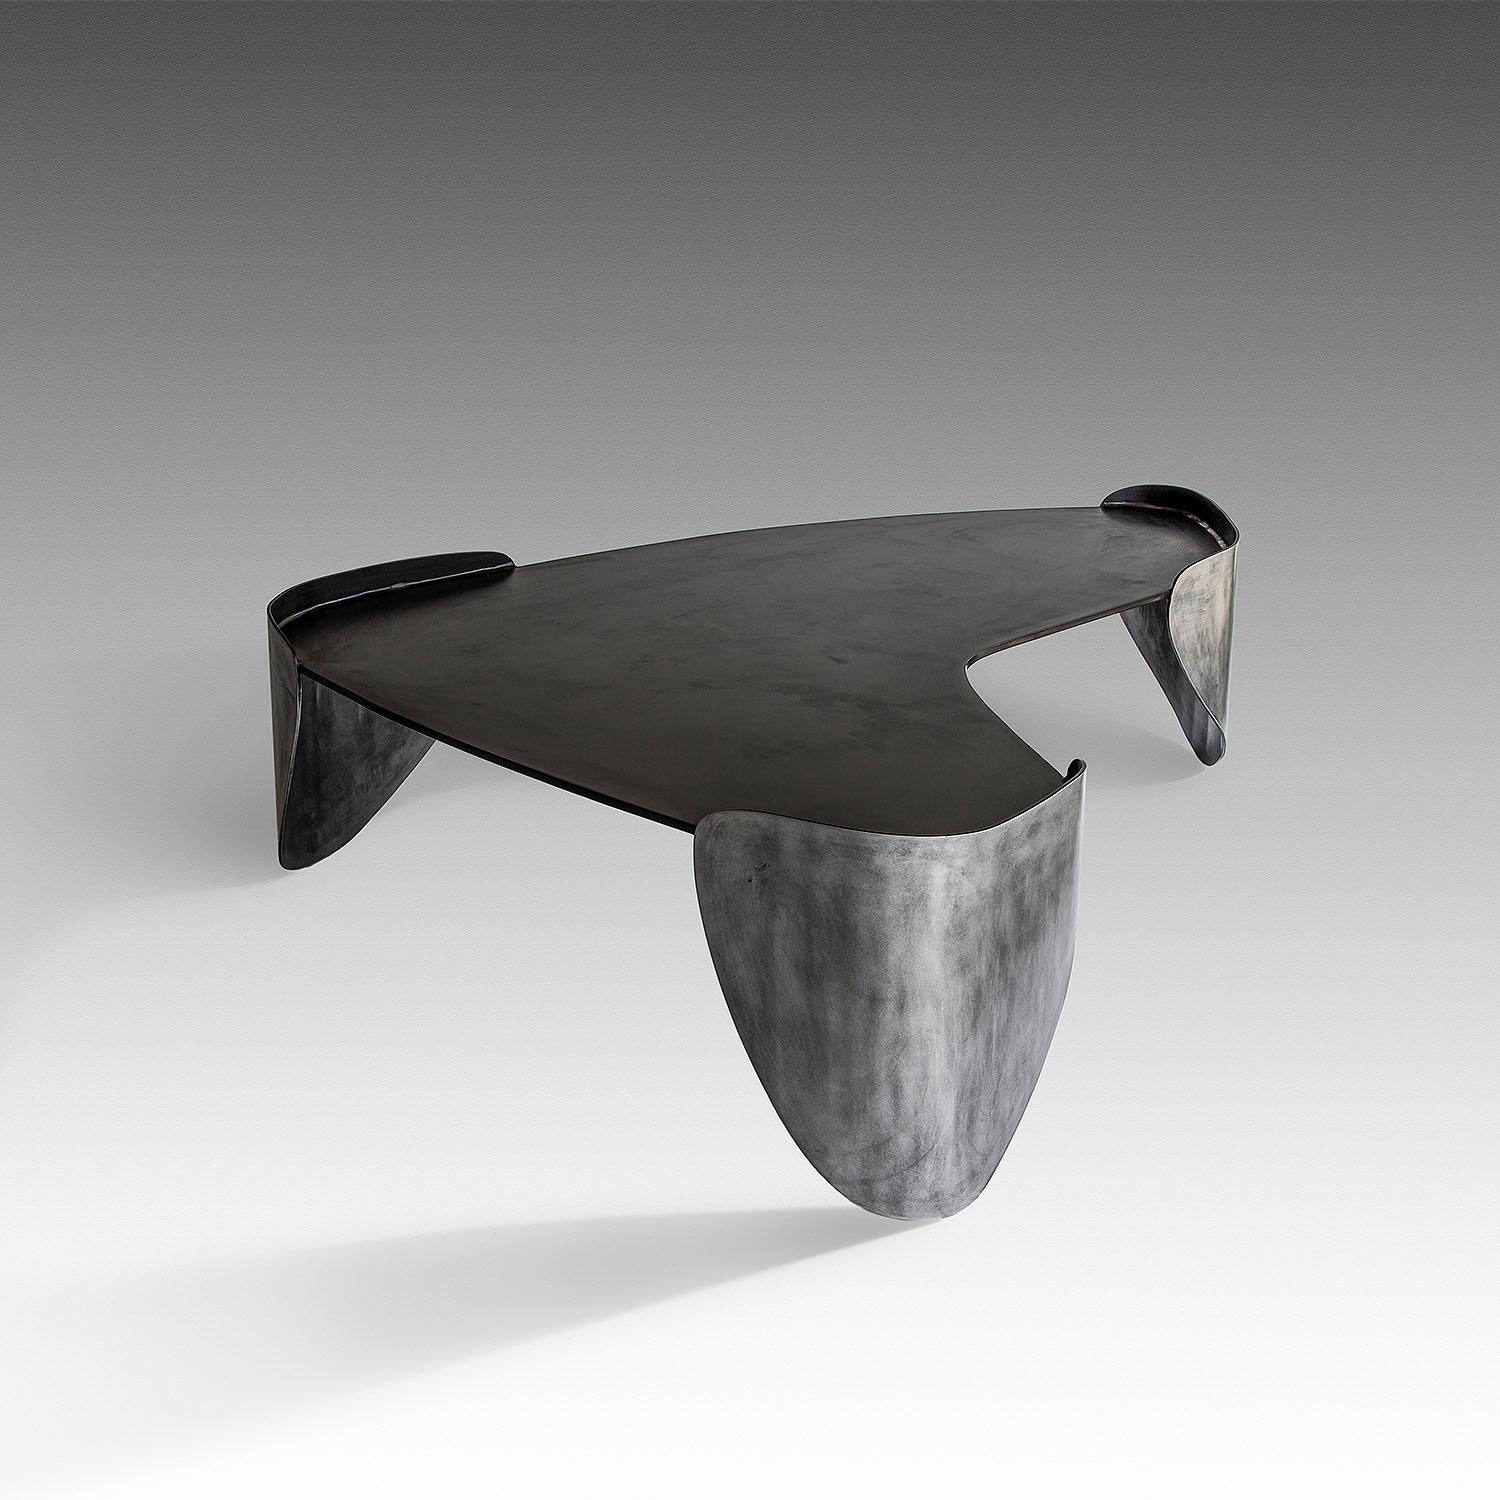 Contemporary Aluminium & Steel Coffee Table, Laguna by Adam Court for Okha

Design: Adam Court

Material: Patinated Aluminium / Blue Black Mild Steel Frame Options

Dimensions:
1380W X 1170D X 410H mm
54.3W X 46.1D X 16.1H in

Handcrafted in